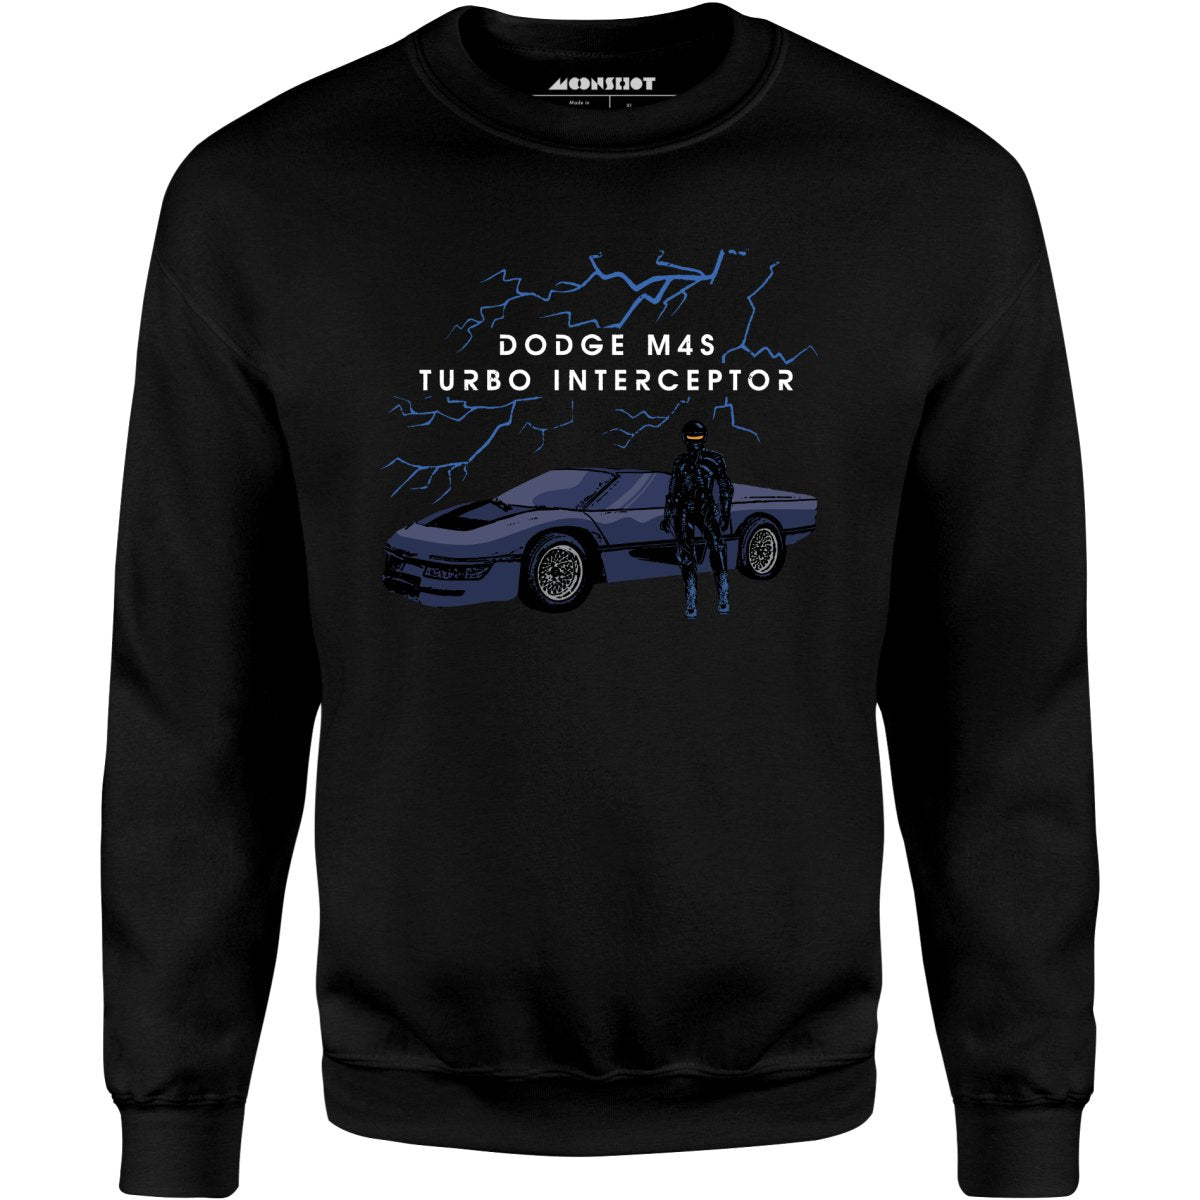 The Wraith - Dodge M4S Turbo Interceptor - Unisex Sweatshirt